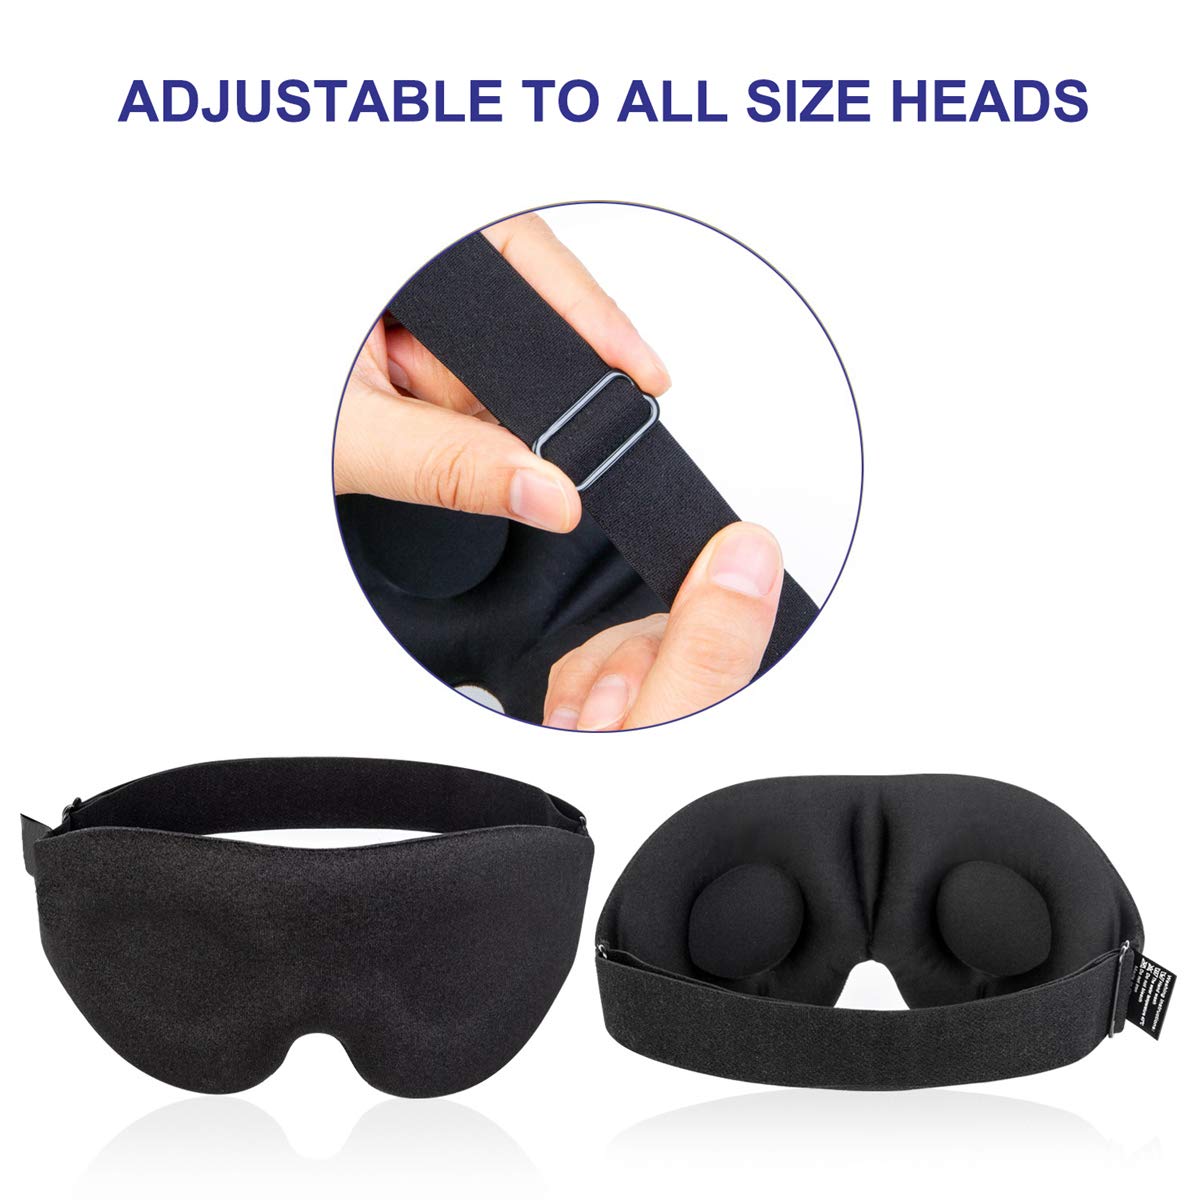 YIVIEW Sleep Mask for Men Women, 100% Light Blocking 3D Eye Mask of Night Sleeping Blindfold, Relaxing Zero Pressure Eye Cover